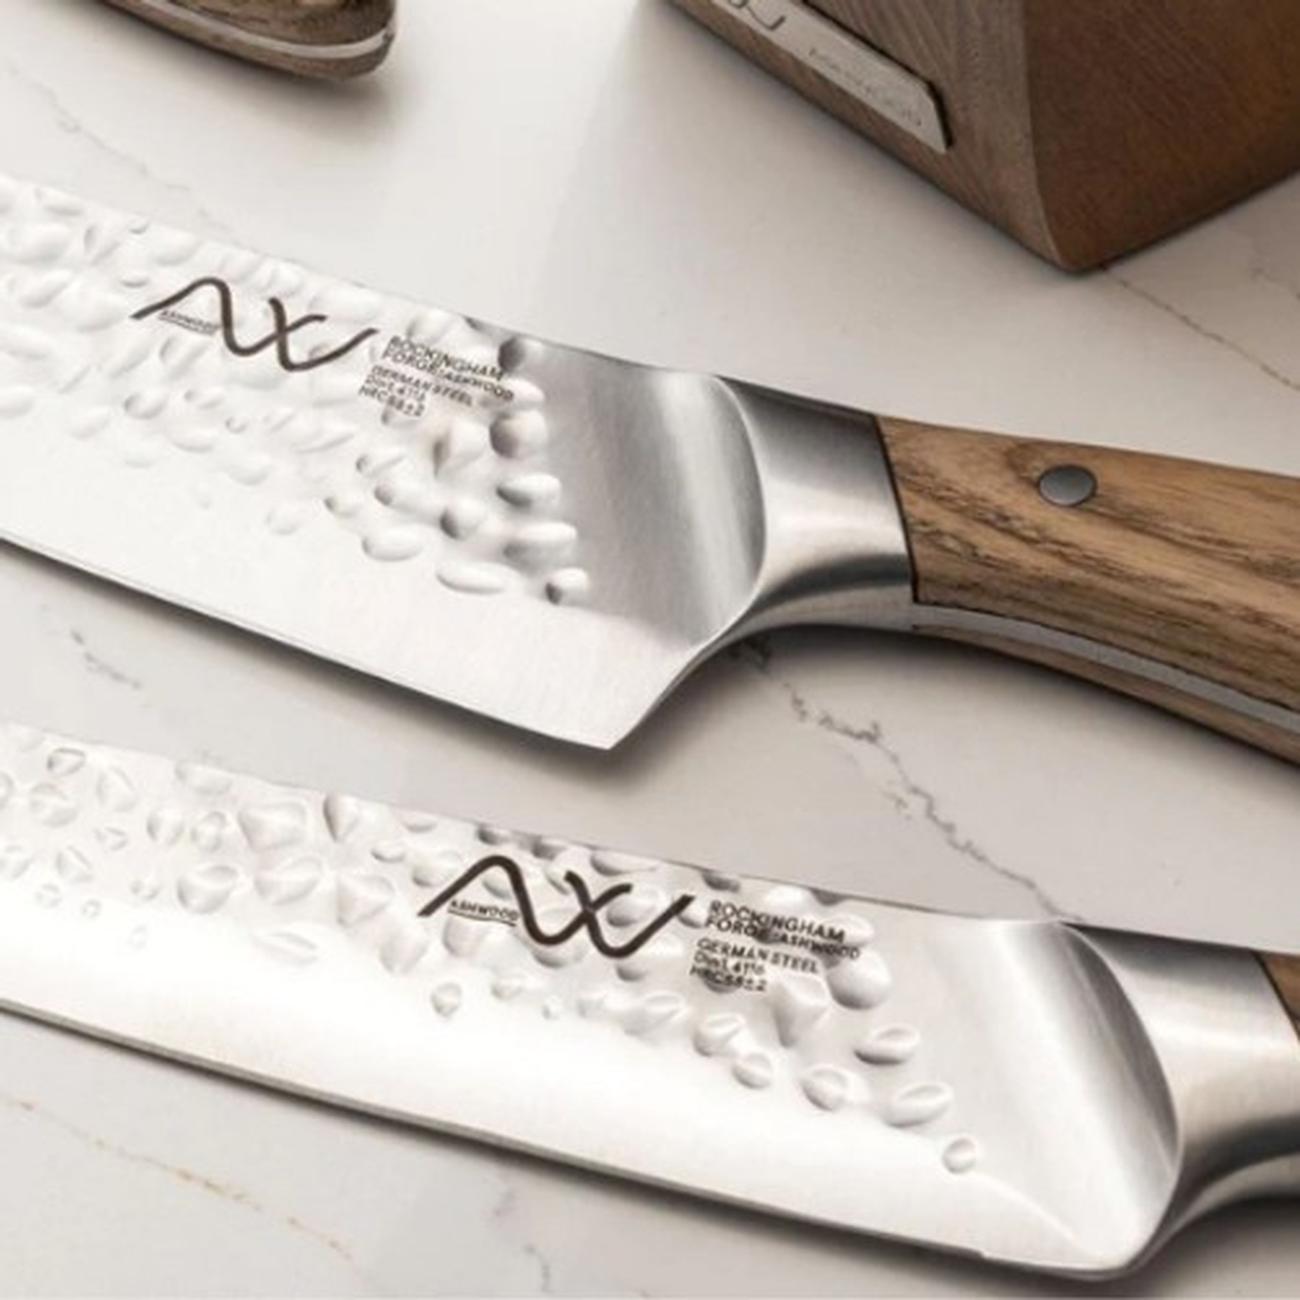 rockingham-forge-ashwood-paring-knife-10cm - Rockingham Forge Ashwood Paring Knife 10cm